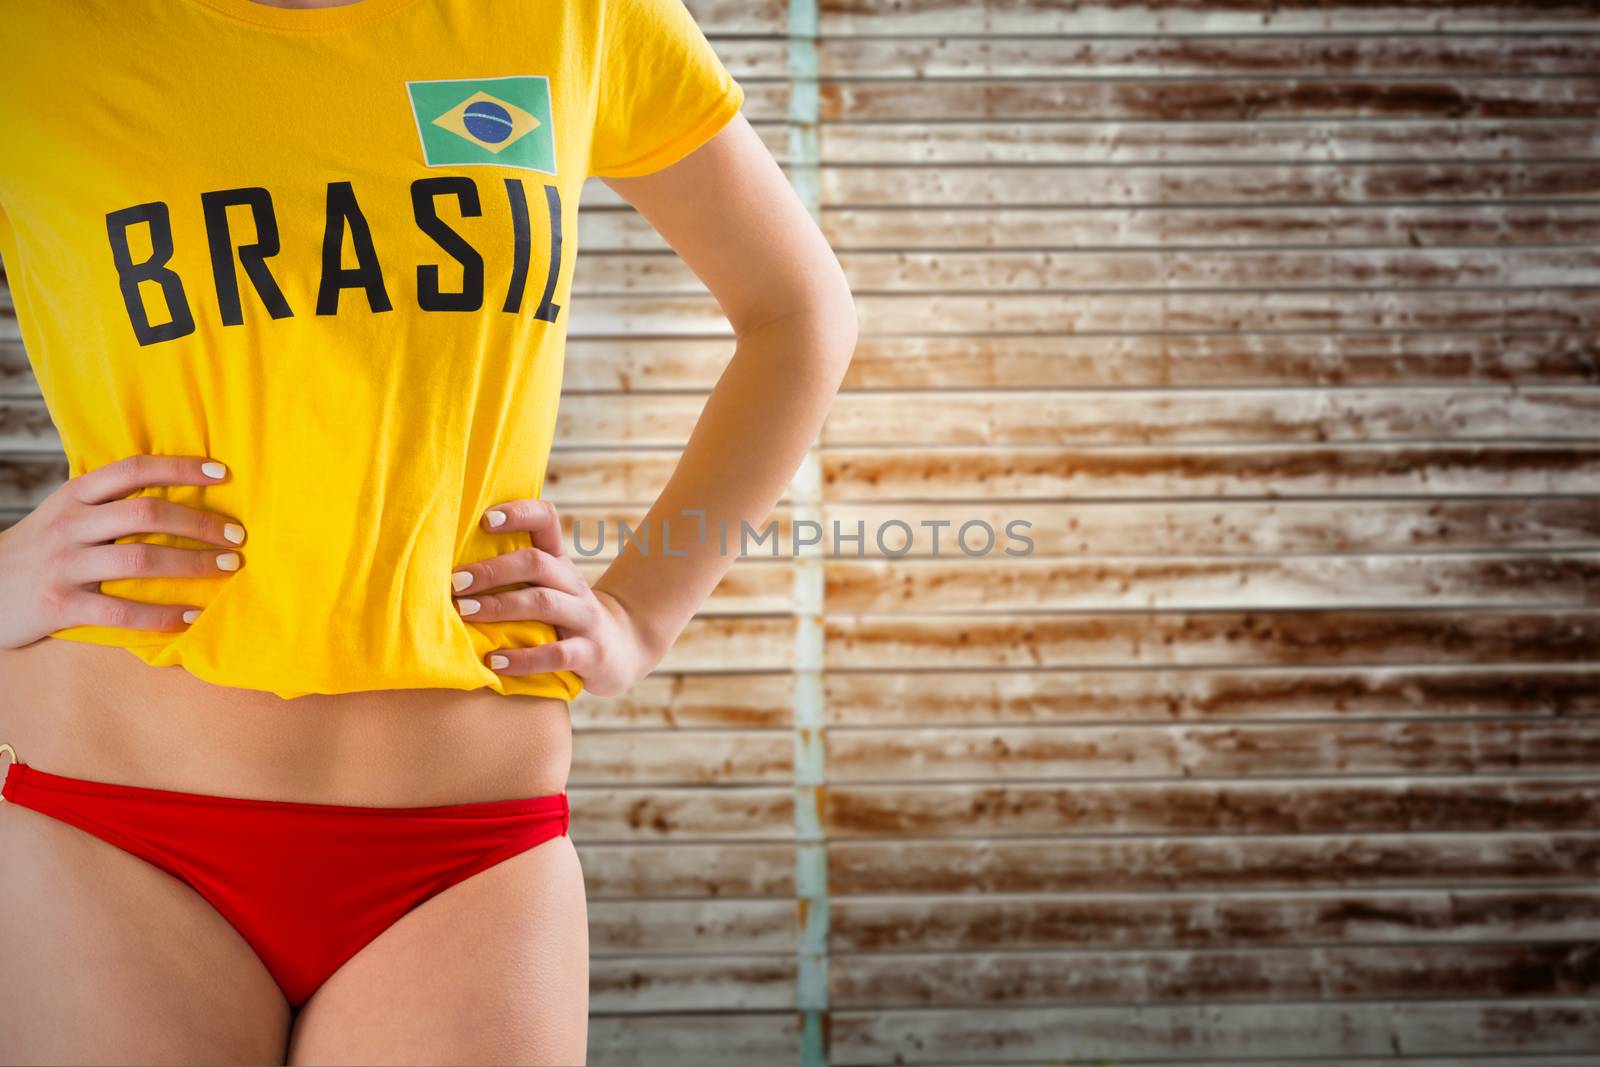 Pretty girl in bikini and brasil tshirt against wooden planks